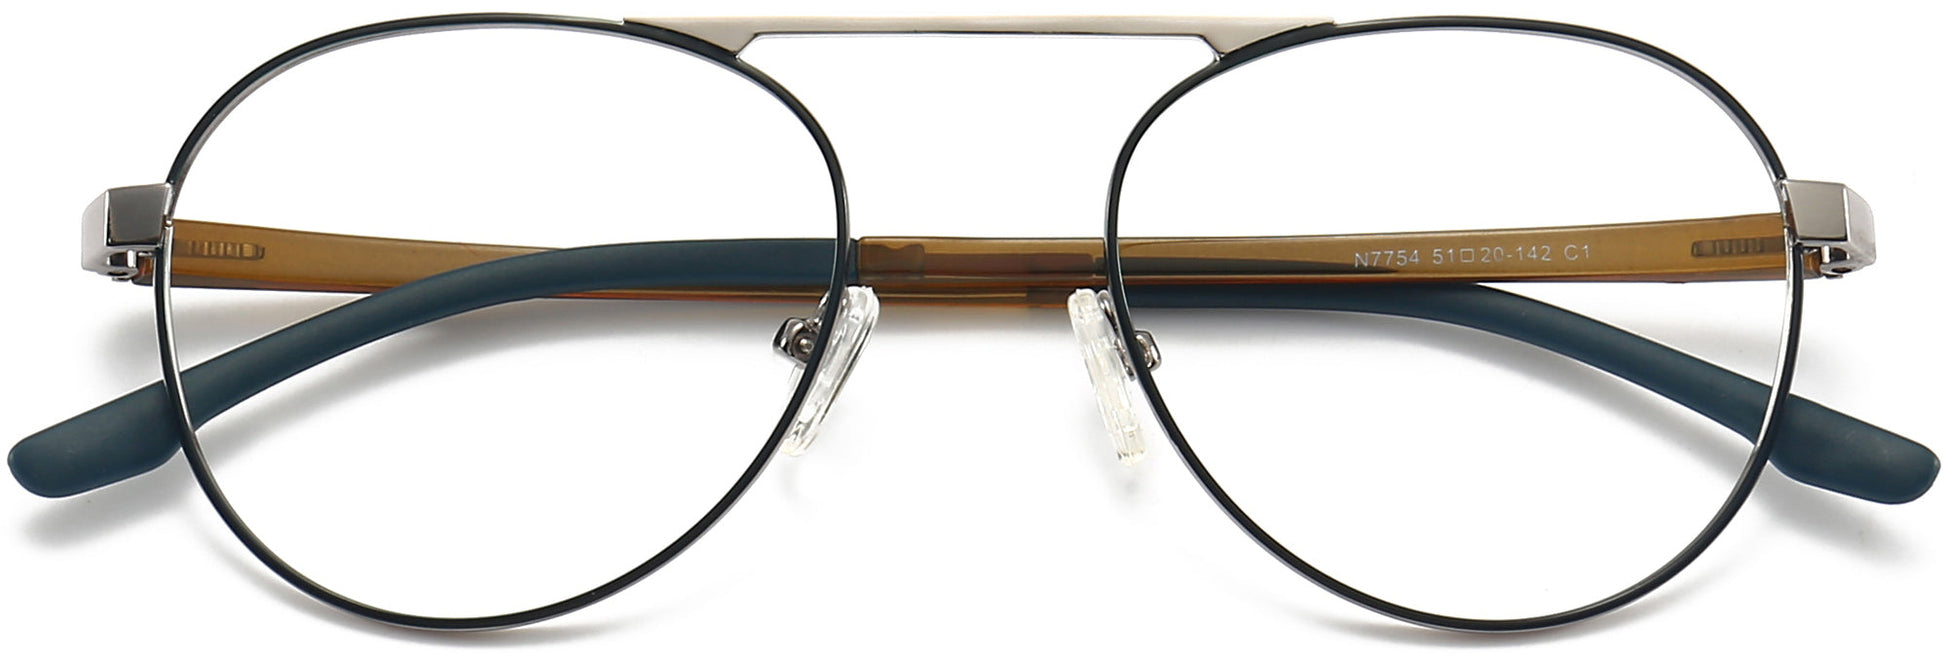 Kaysen Round Black Eyeglasses from ANRRI, closed view